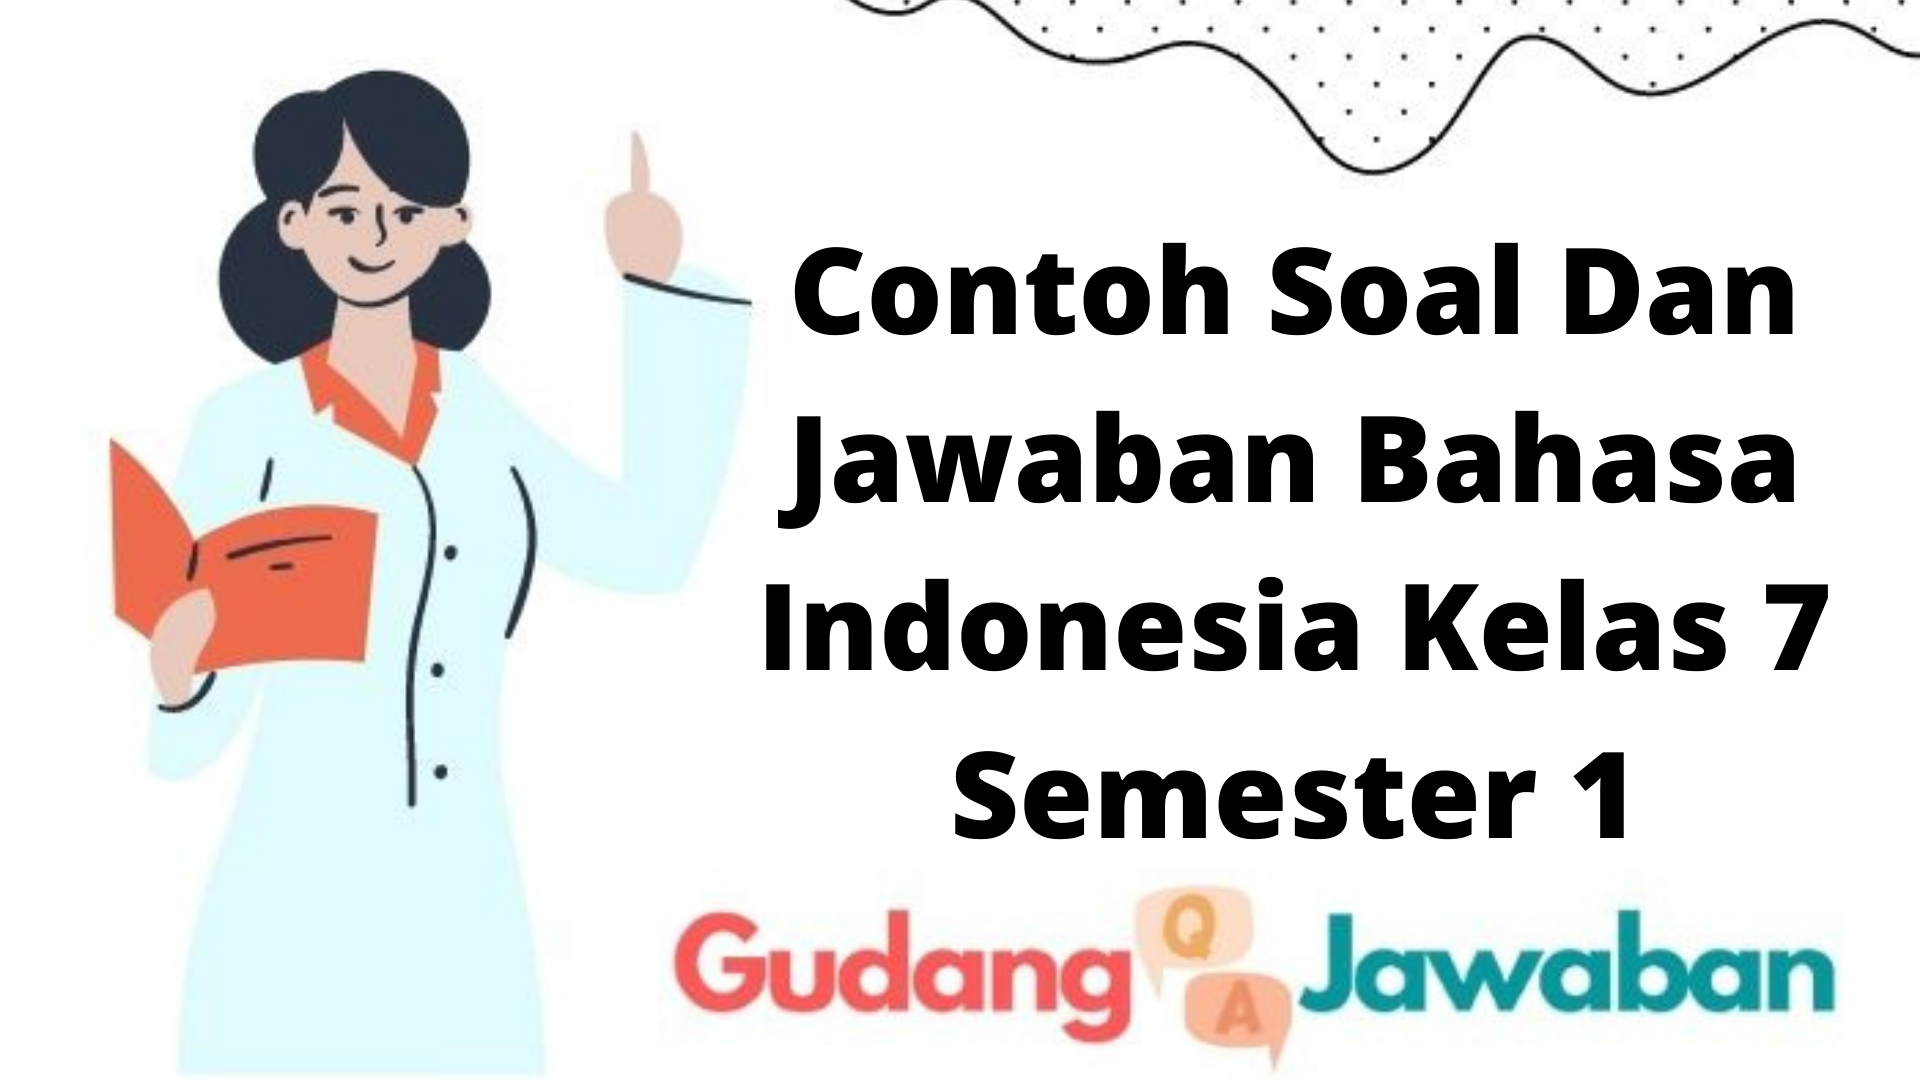 Contoh Soal Dan Jawaban Bahasa Indonesia Kelas 7 Semester 1